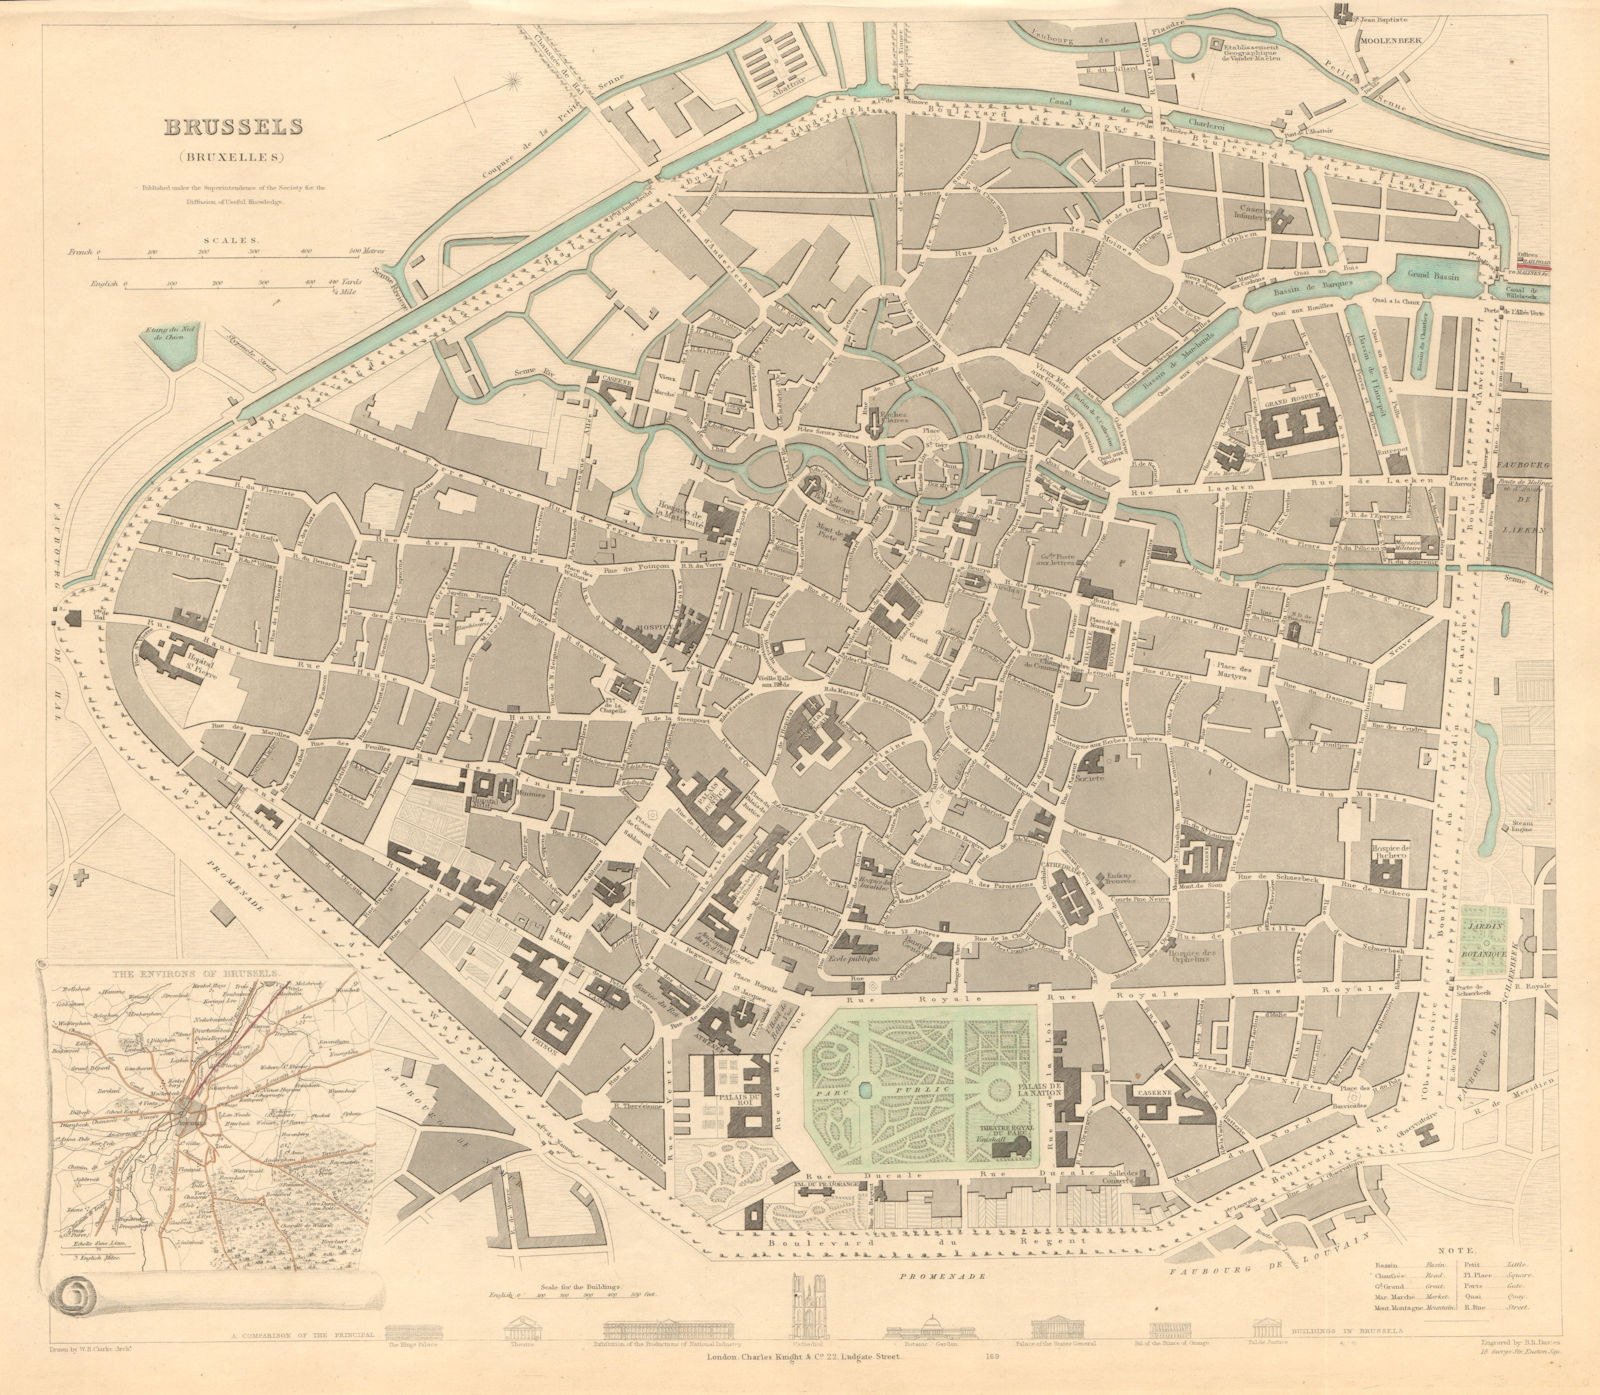 BRUSSELS BRUXELLES BRUSSEL antique town city map plan. Inset environs. SDUK 1847